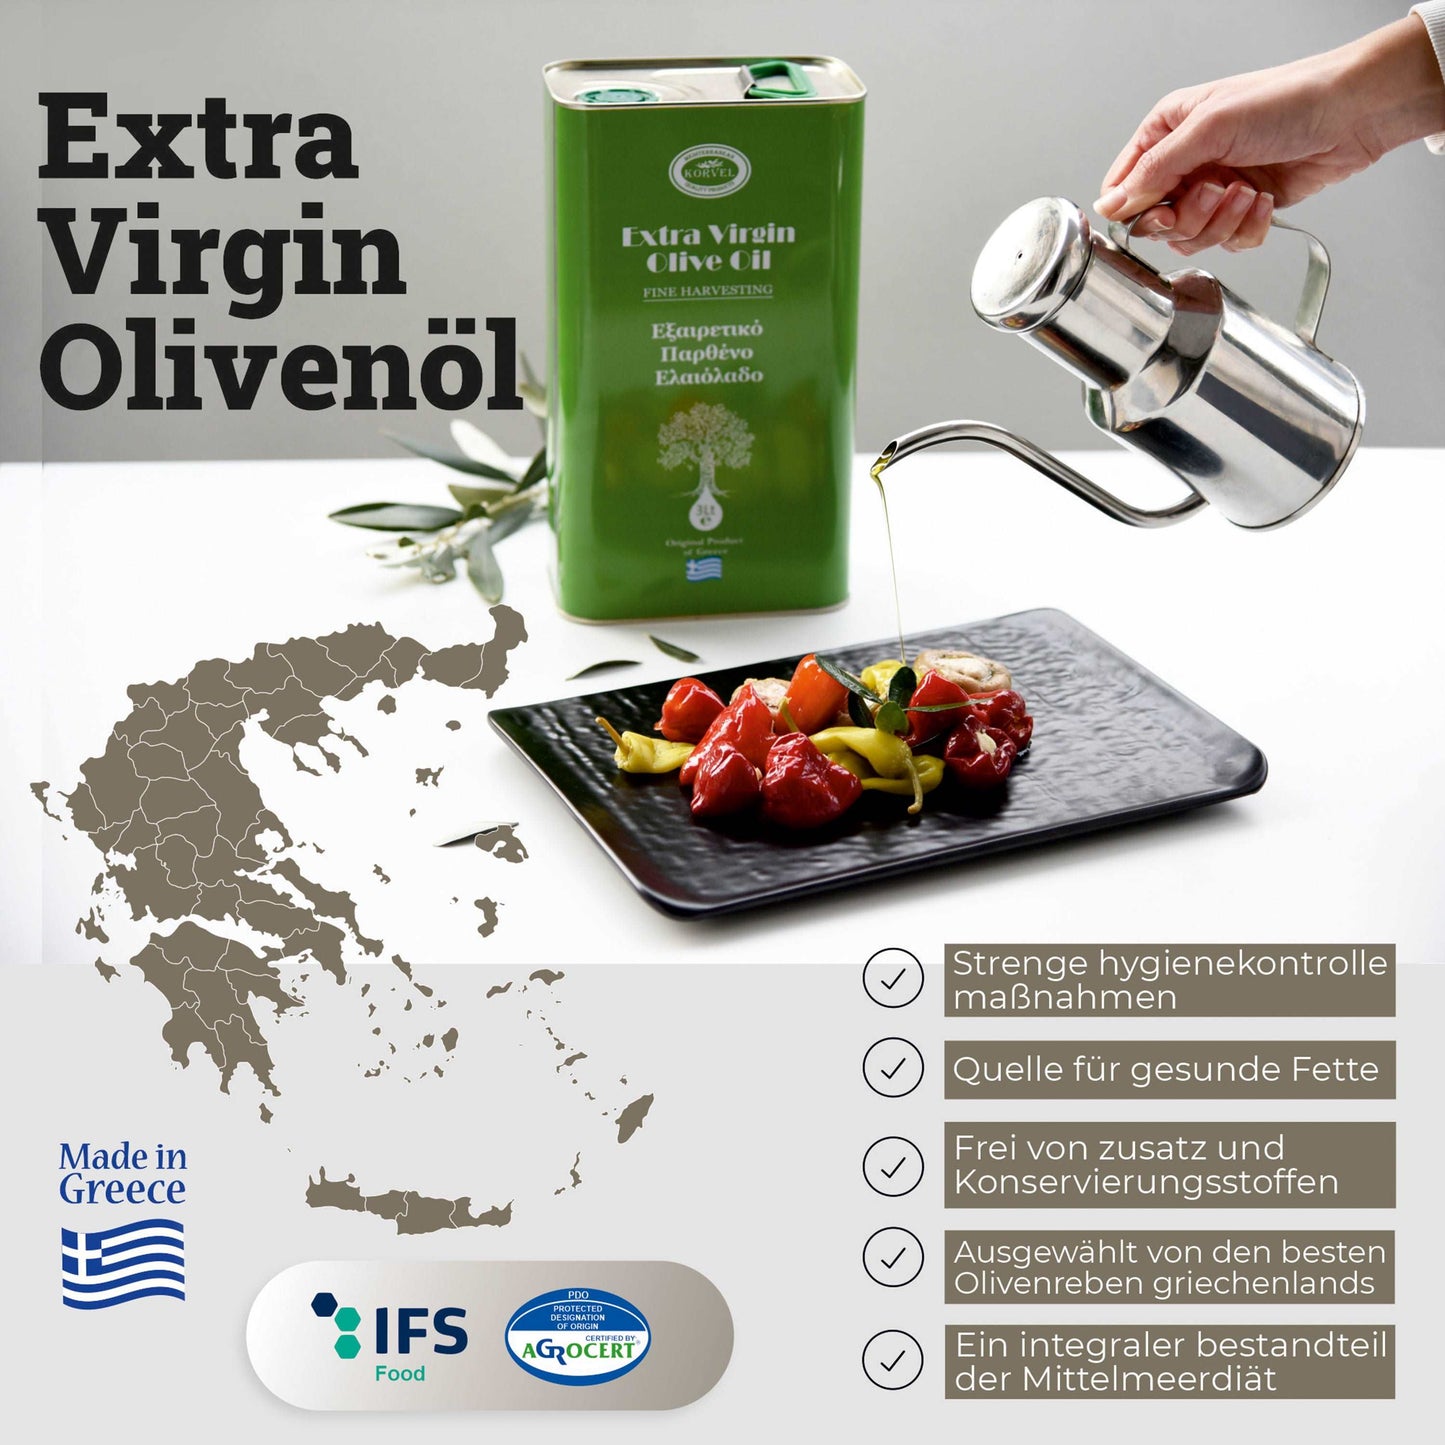 KORVEL Greek Extra Virgin Olive Oil 101.4 FL OZ